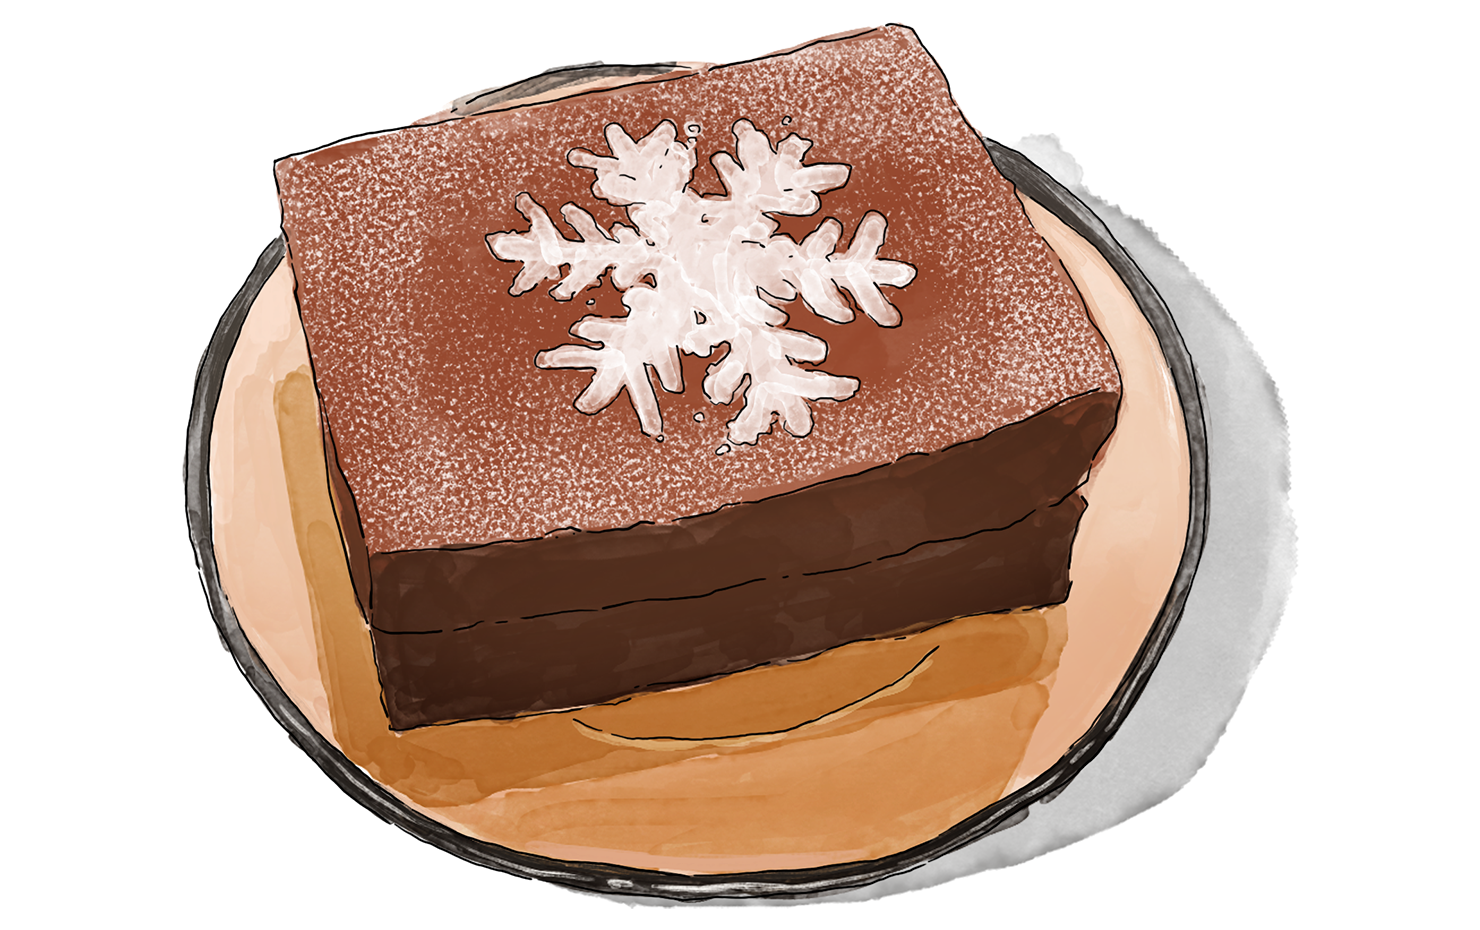 Illustration of a slice of Hazelnut cake